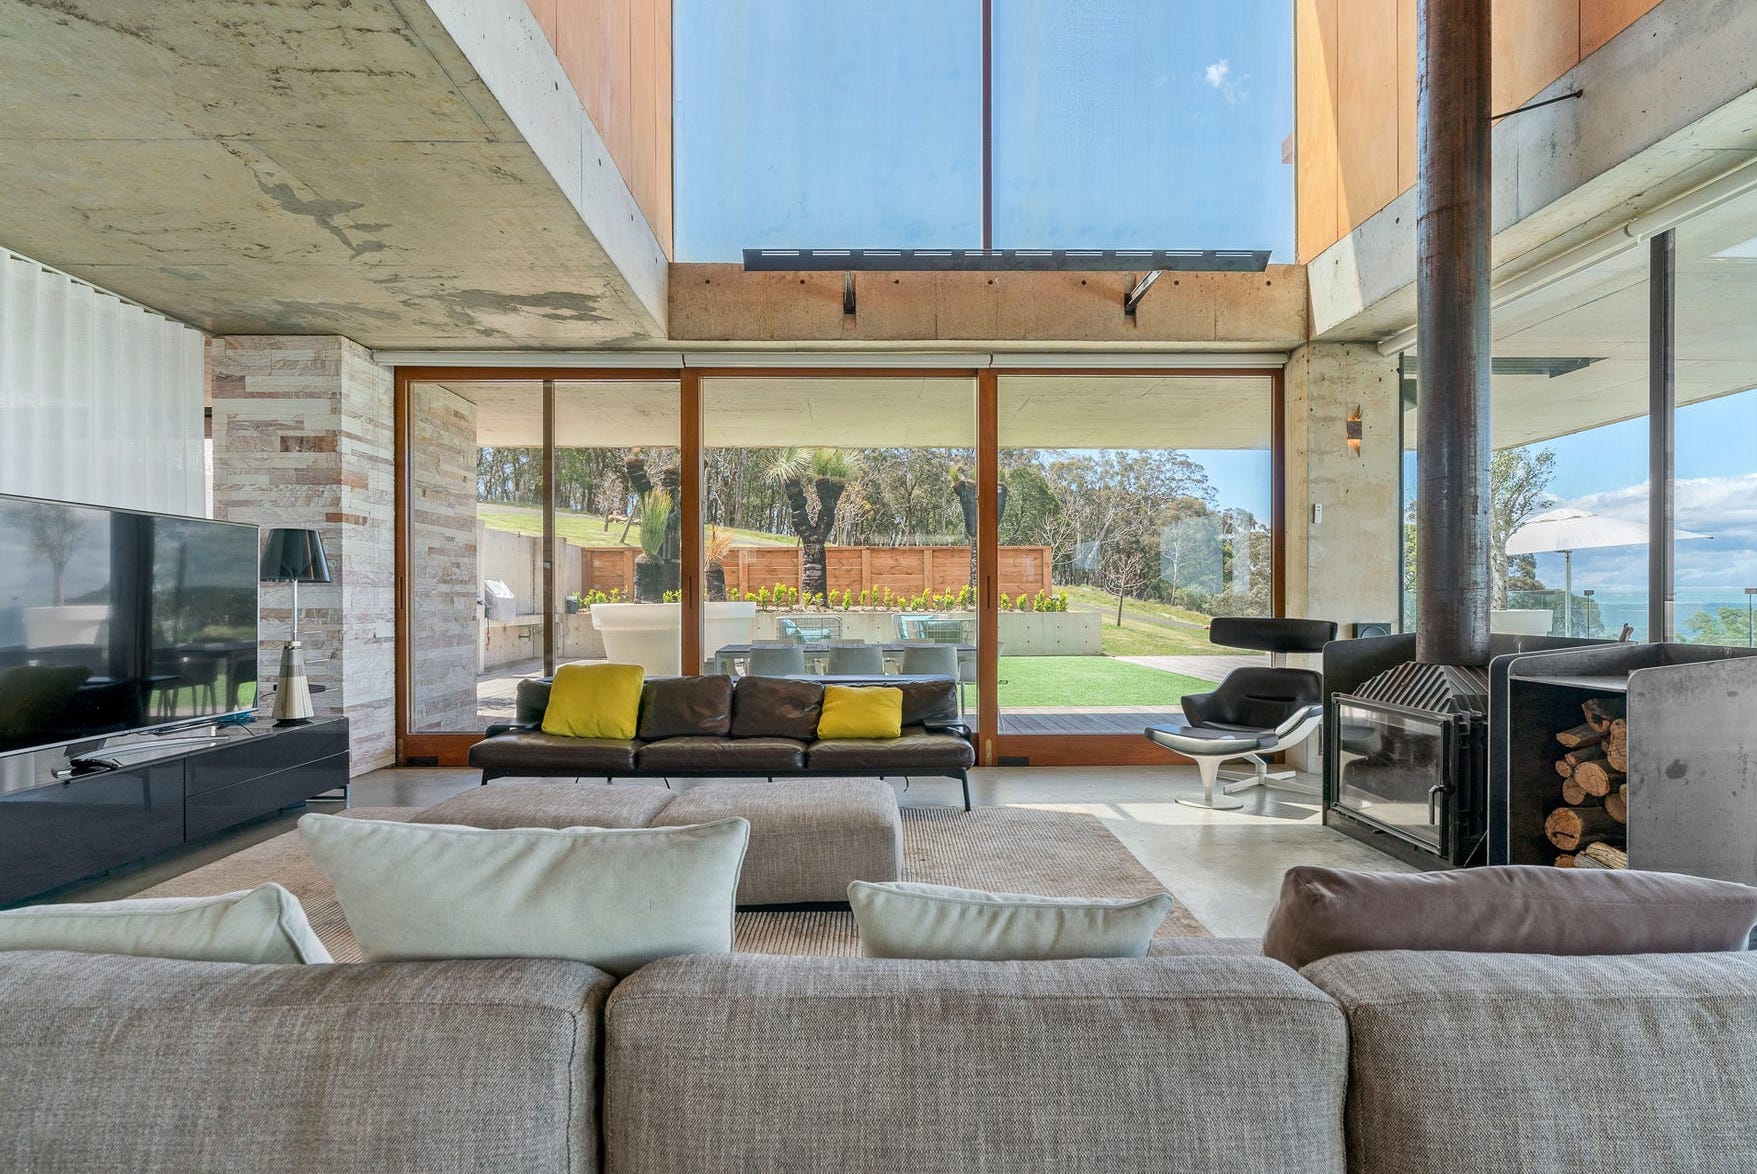 Concrete construction, floor to ceiling glass windows